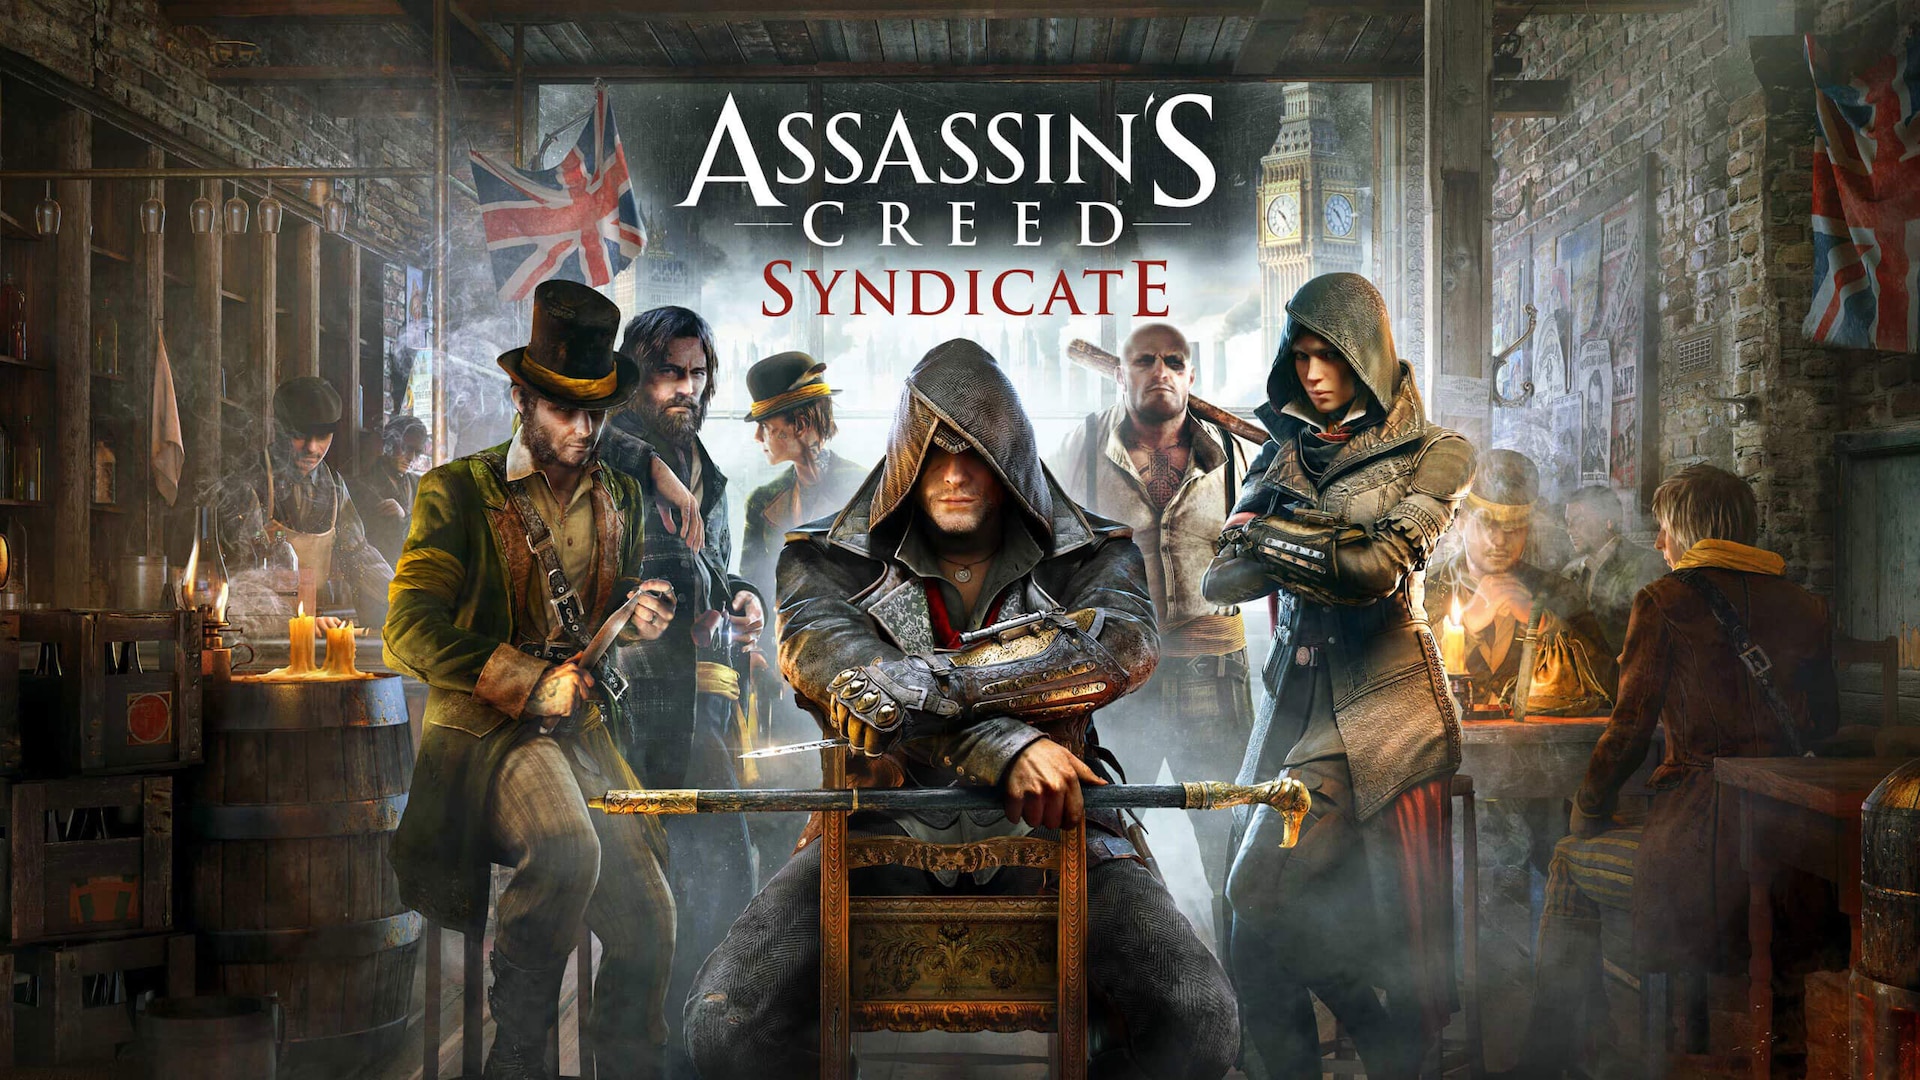 180 TL değerindeki Assassin's Creed Syndicate, Epic Store'da ücretsiz